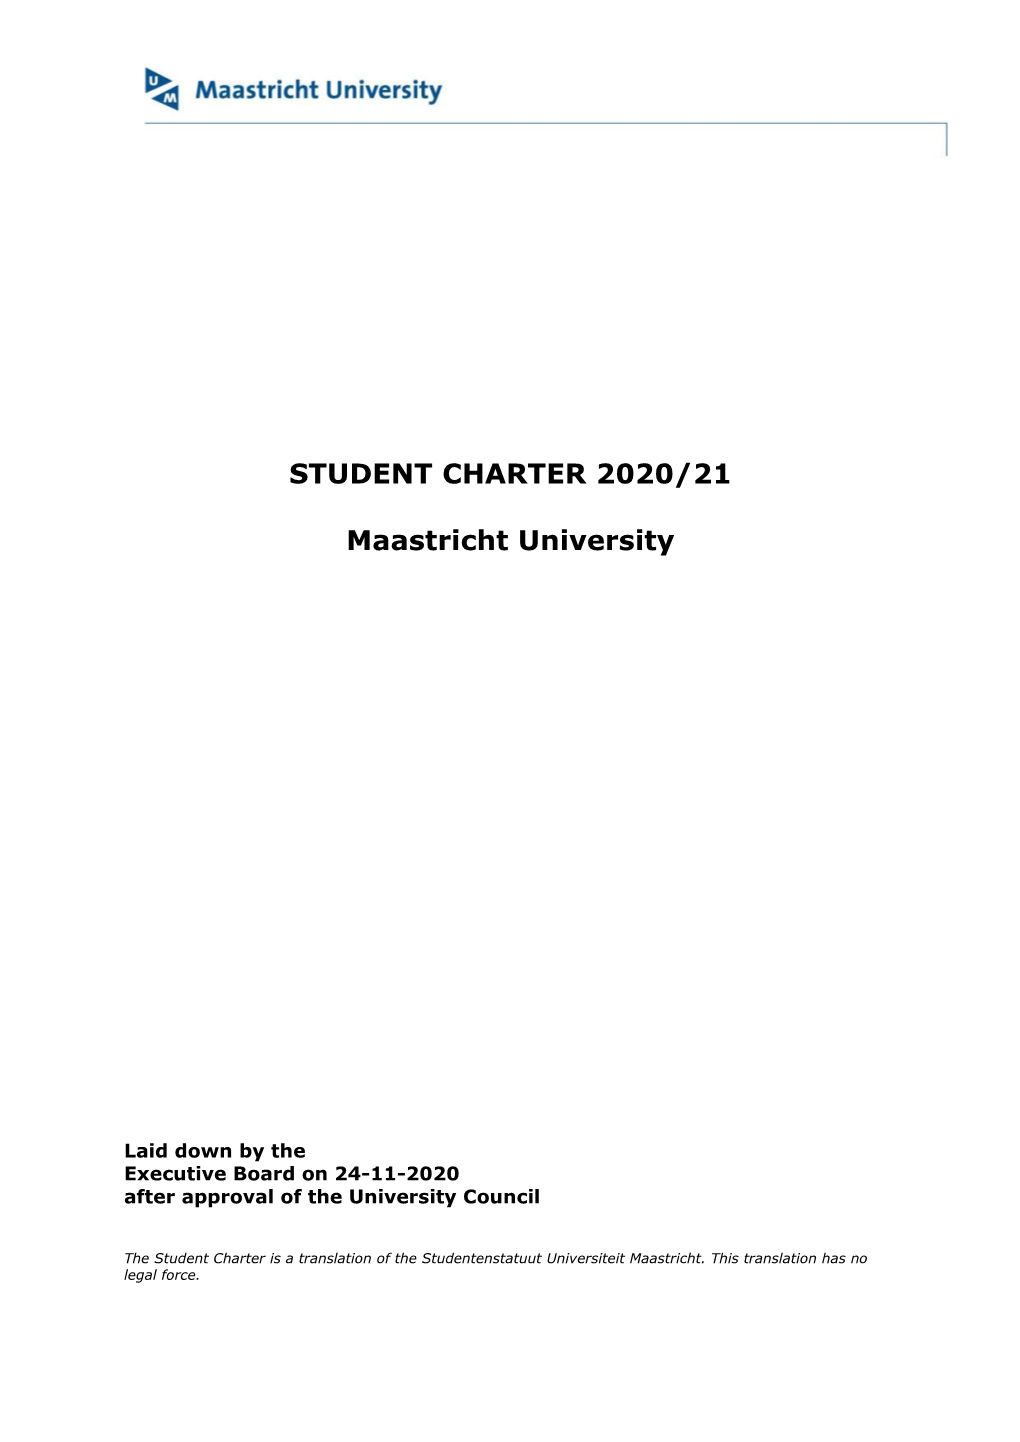 STUDENT CHARTER 2020/21 Maastricht University